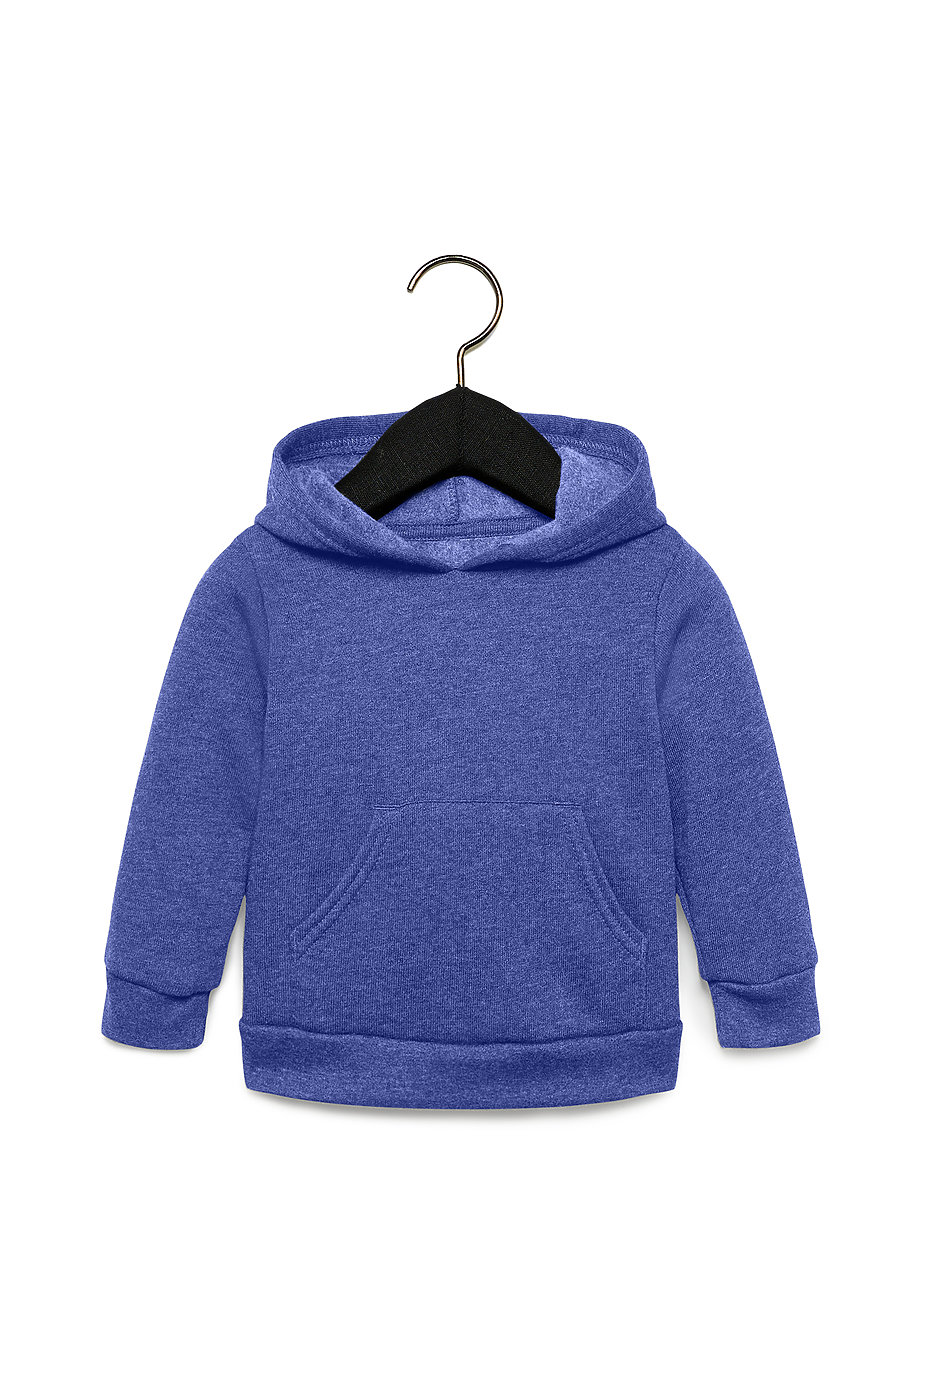 Custom Toddler Hoodies - Design Your Own Jersey Sweatshirt for Kids - Hooded Team Sweaters